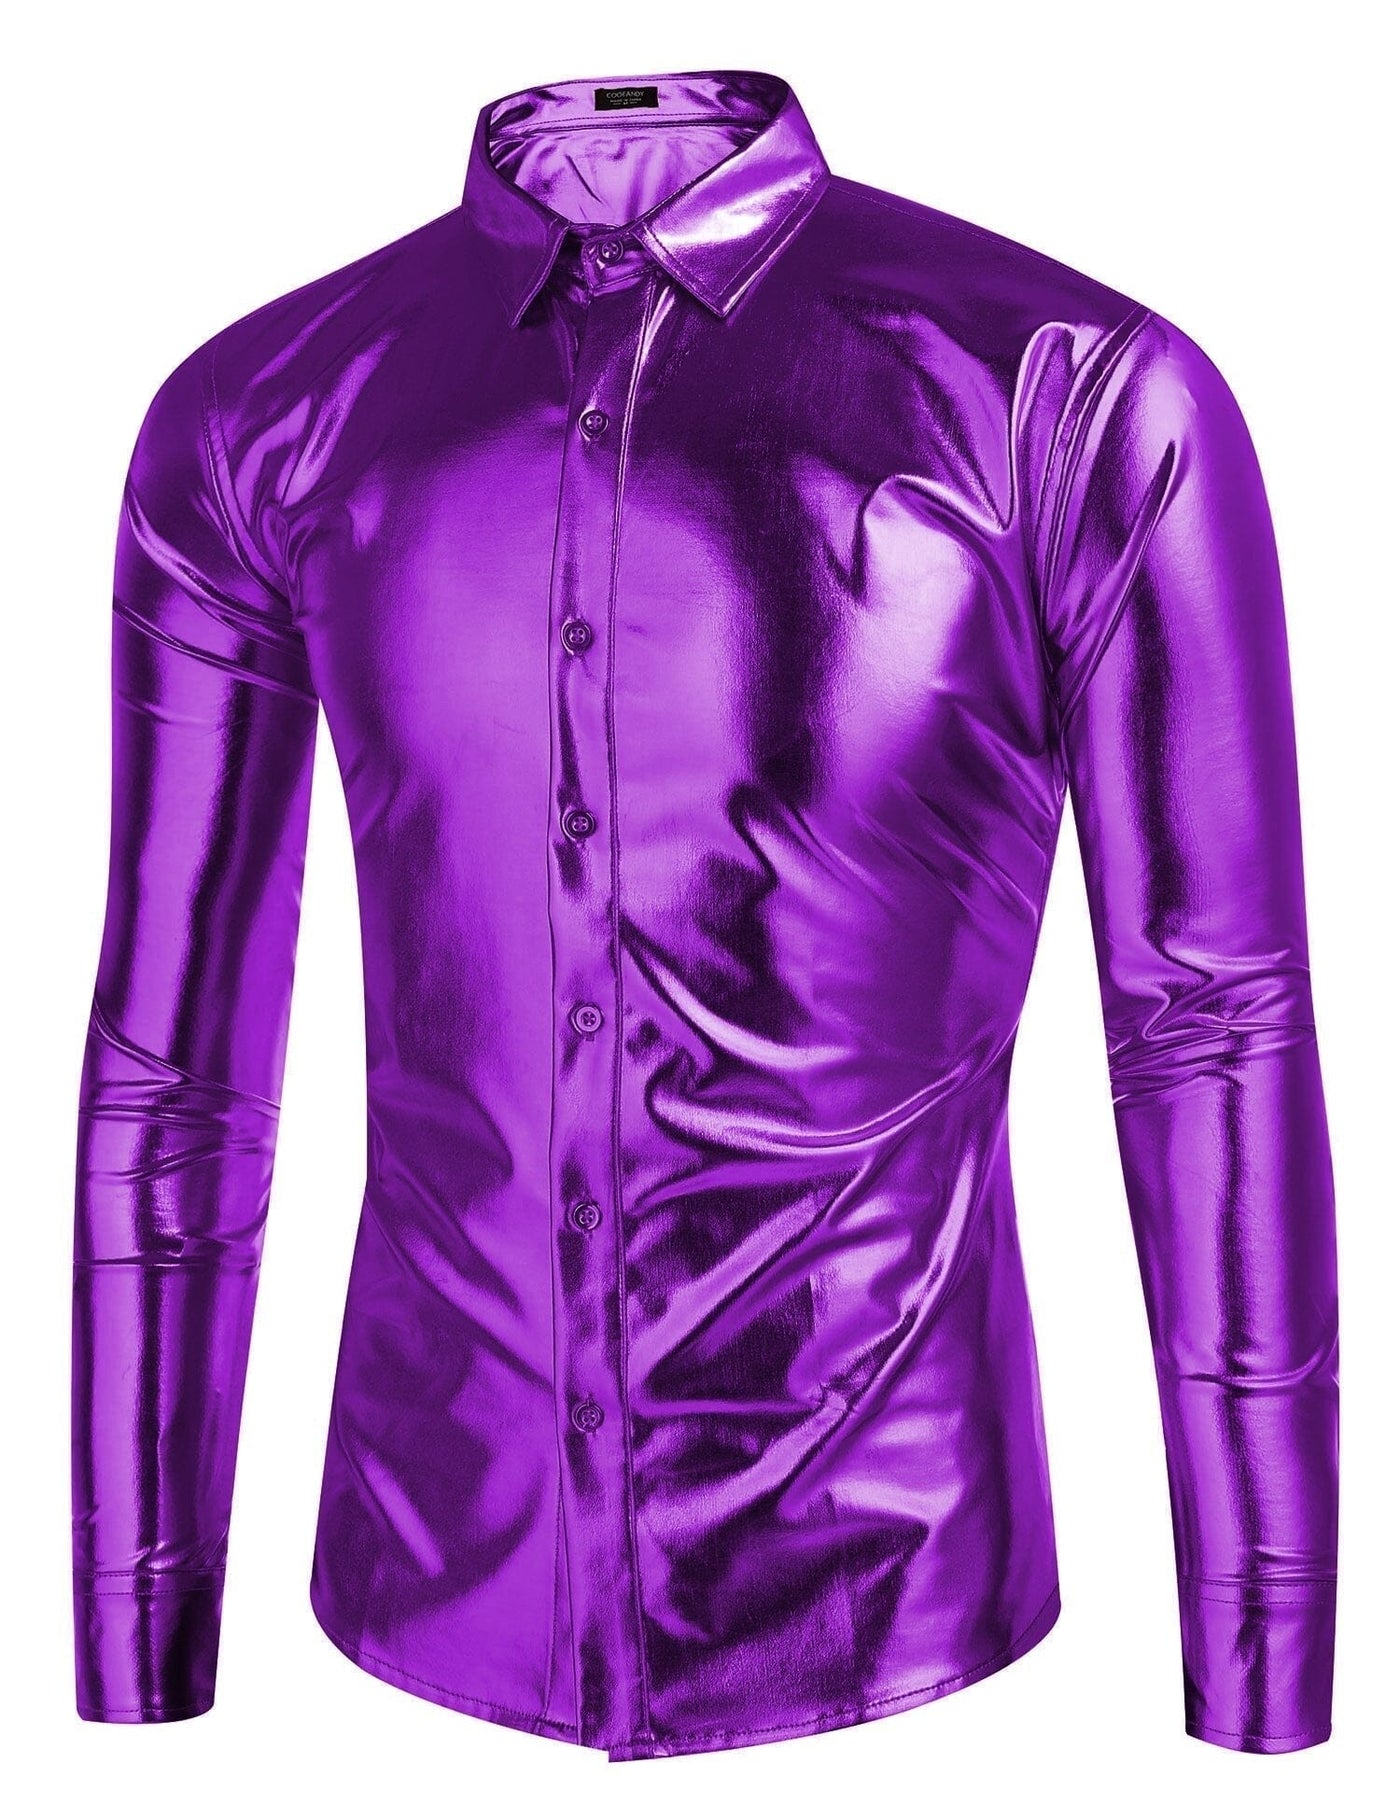 Metallic Disco Shiny Button Nightclub Party Shirt (US Only) Shirts coofandy Purple S 